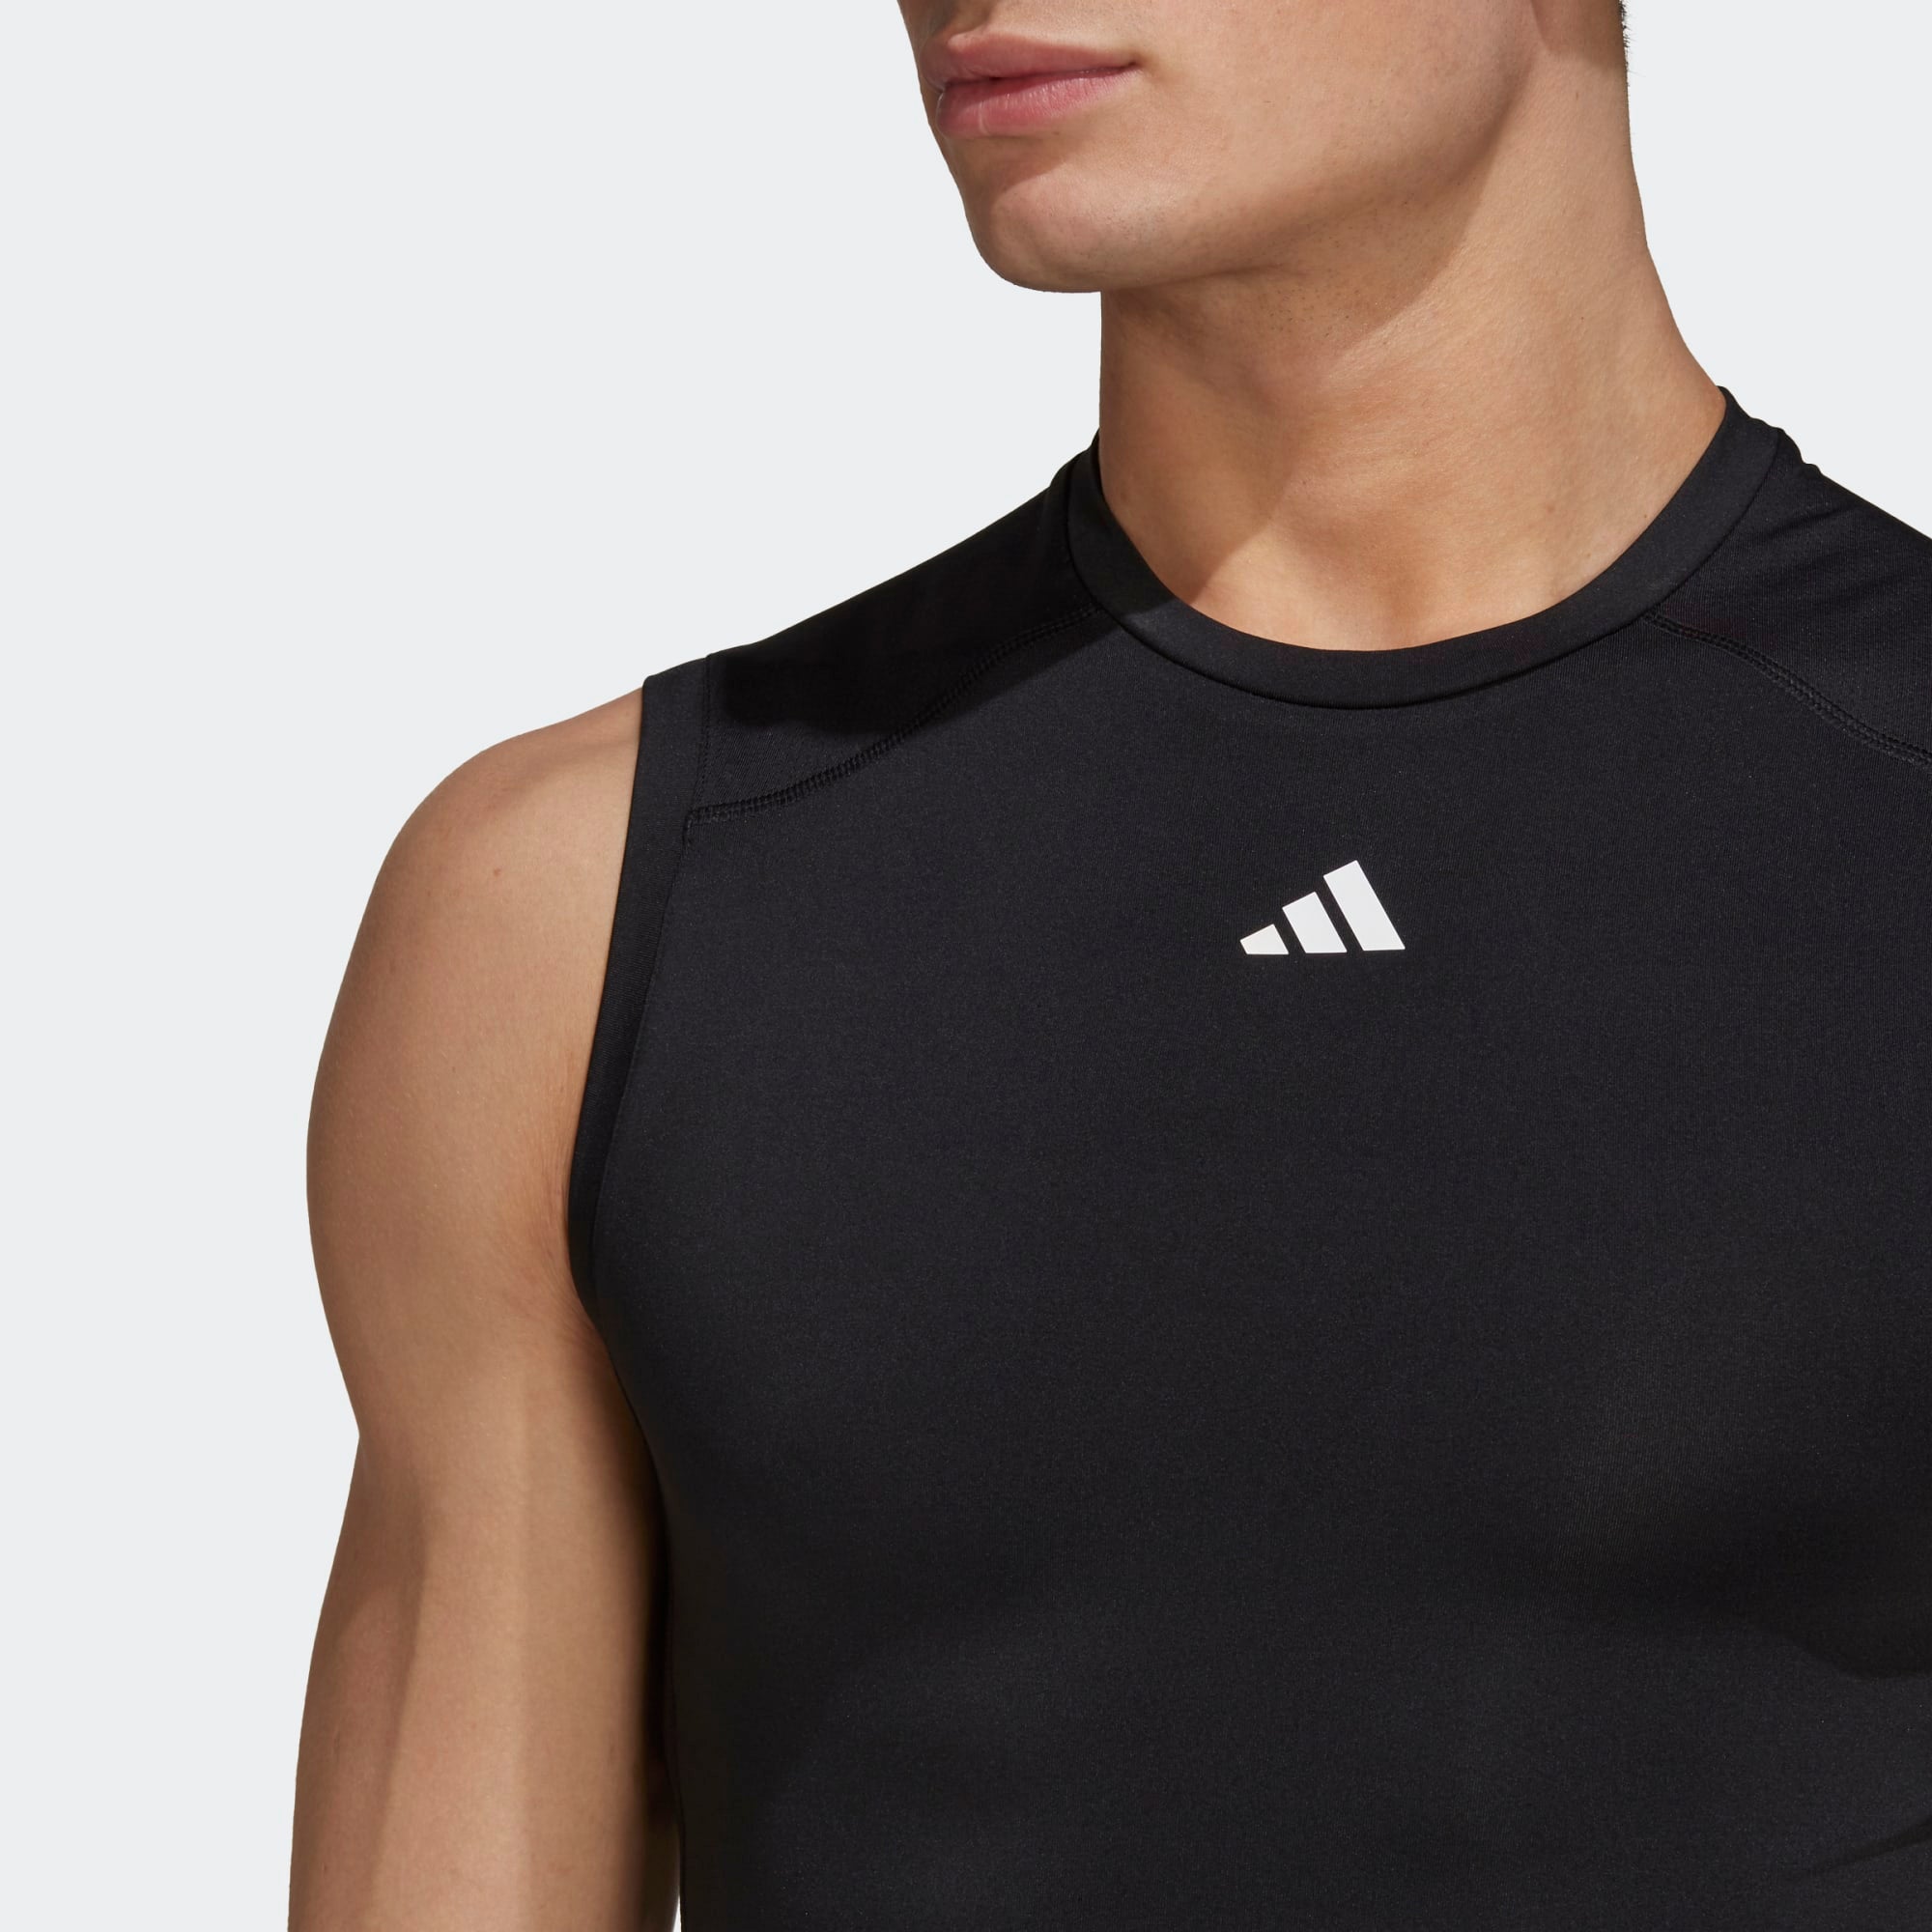  Men's Athletic Shirts & Tees - Nike / Sleeveless